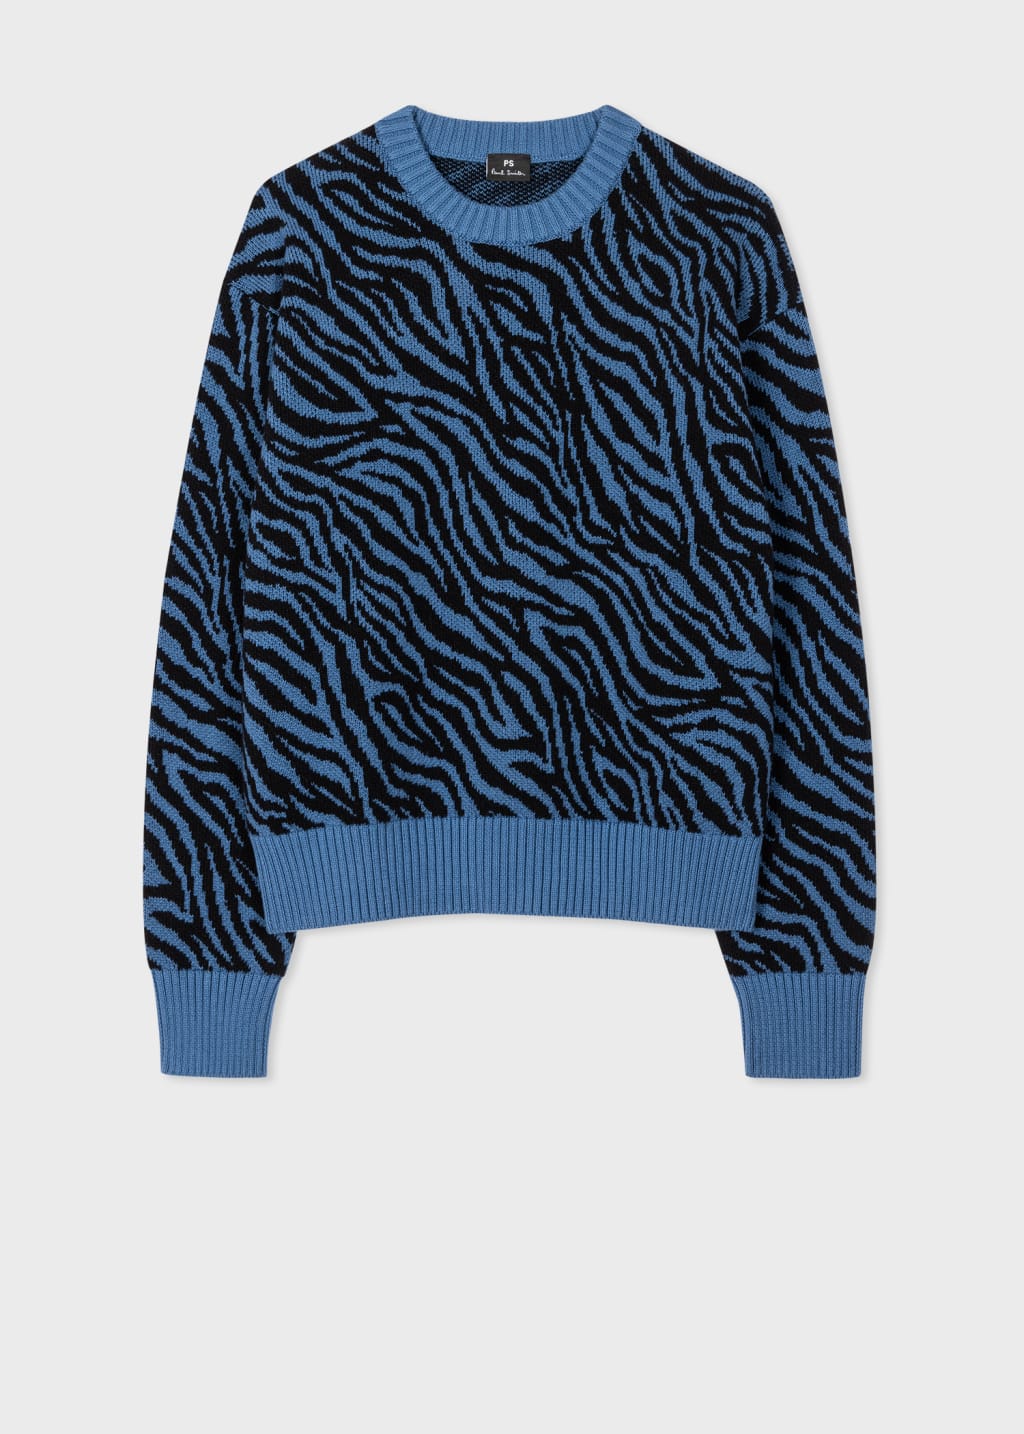 Front View - Women's Organic Cotton Blue Zebra Sweater Paul Smith